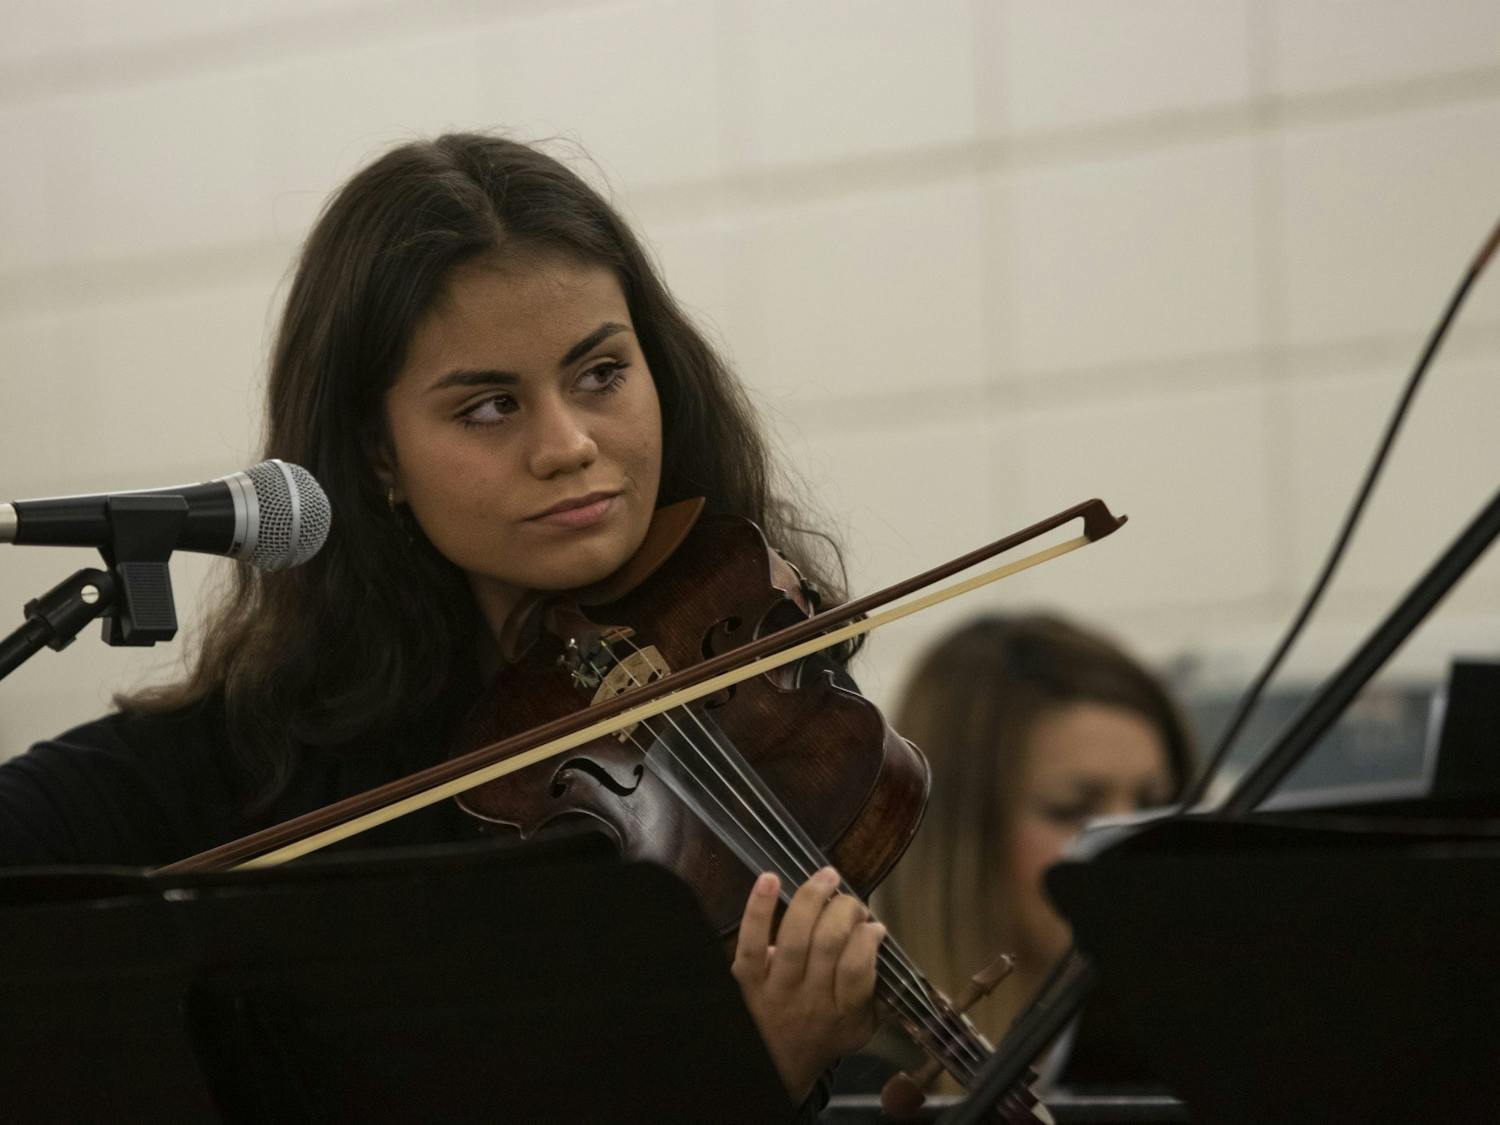 GALLERY: Orquestra nas Escolas Brazilian ensemble visits IU